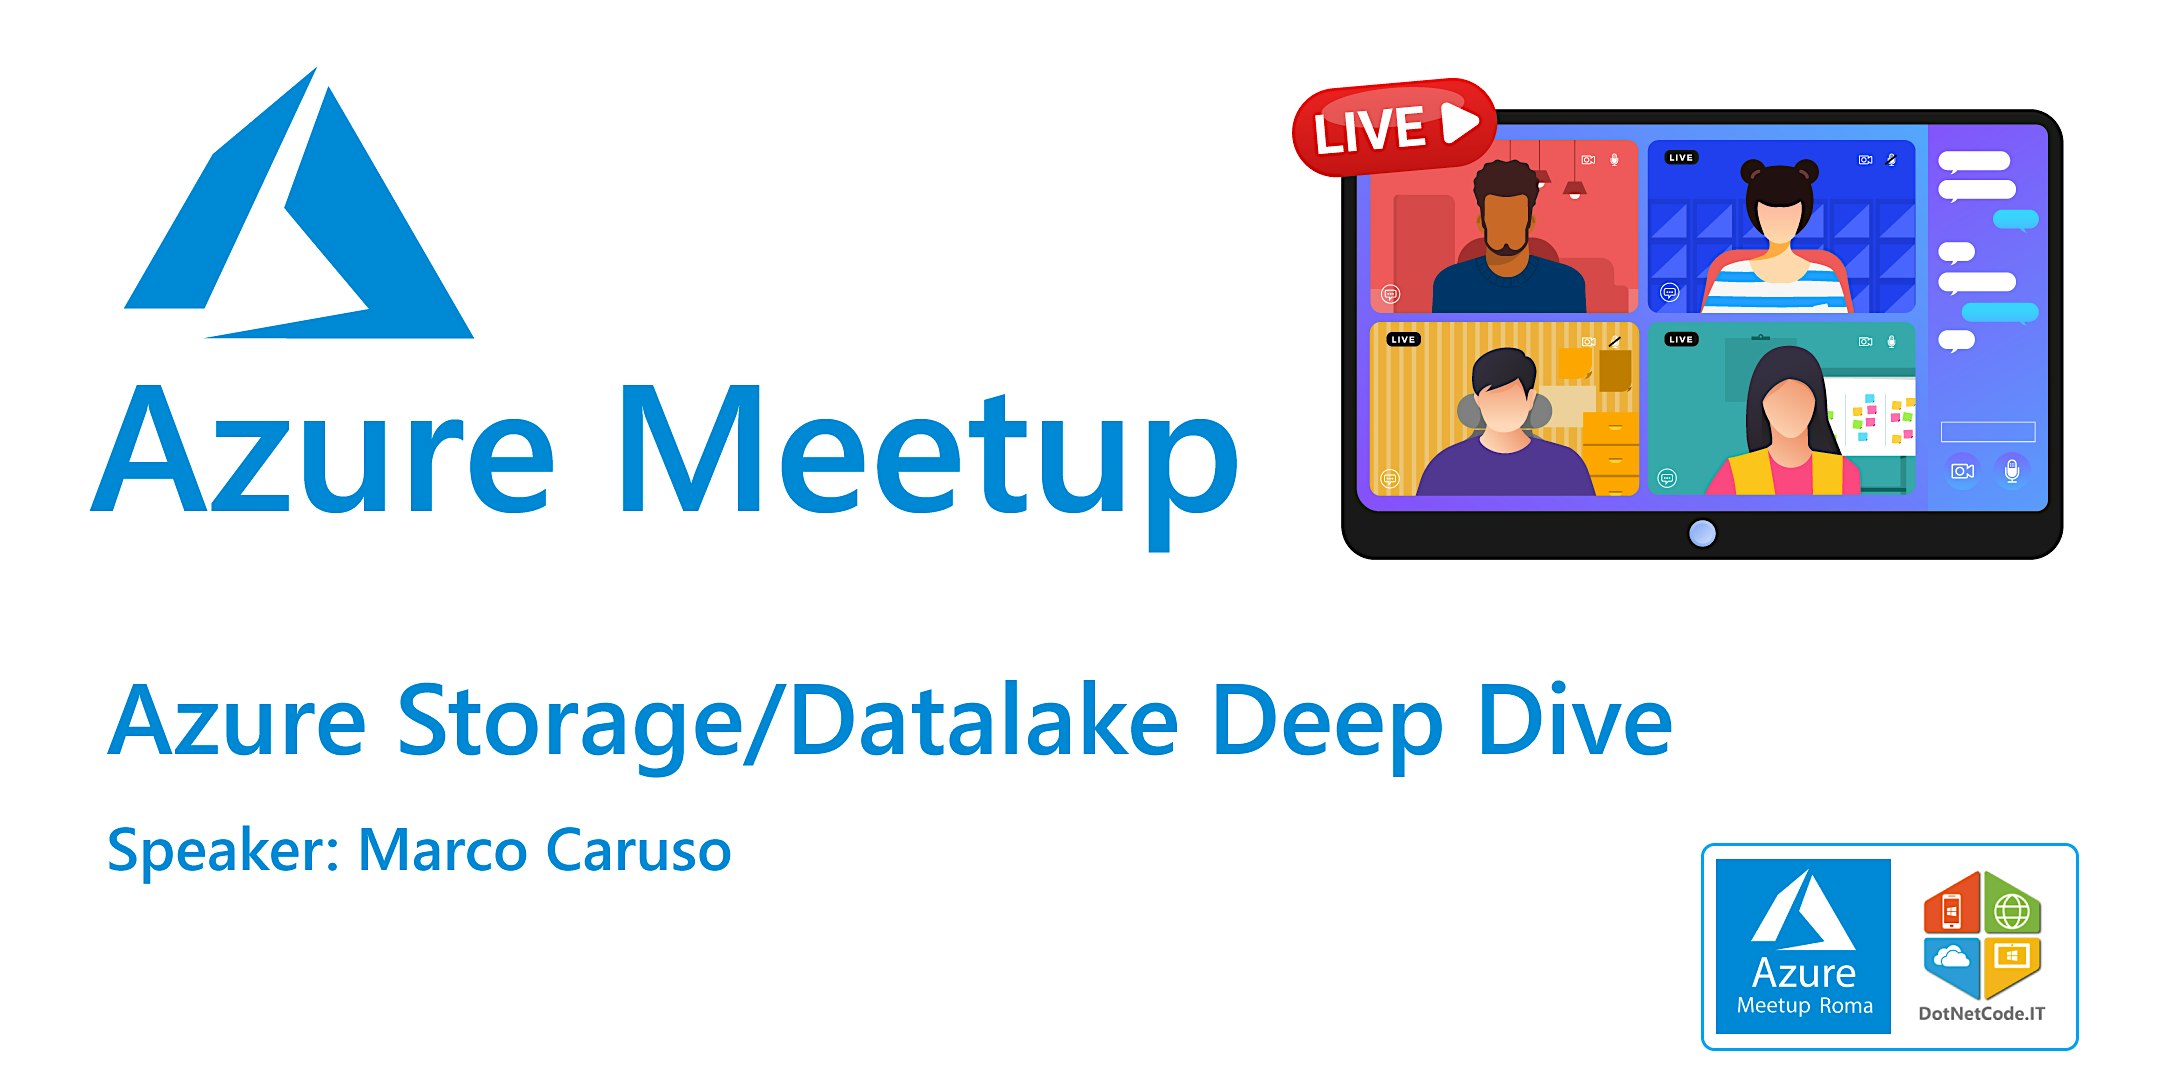 Azure Meetup: Azure Storage/Datalake Deep Dive